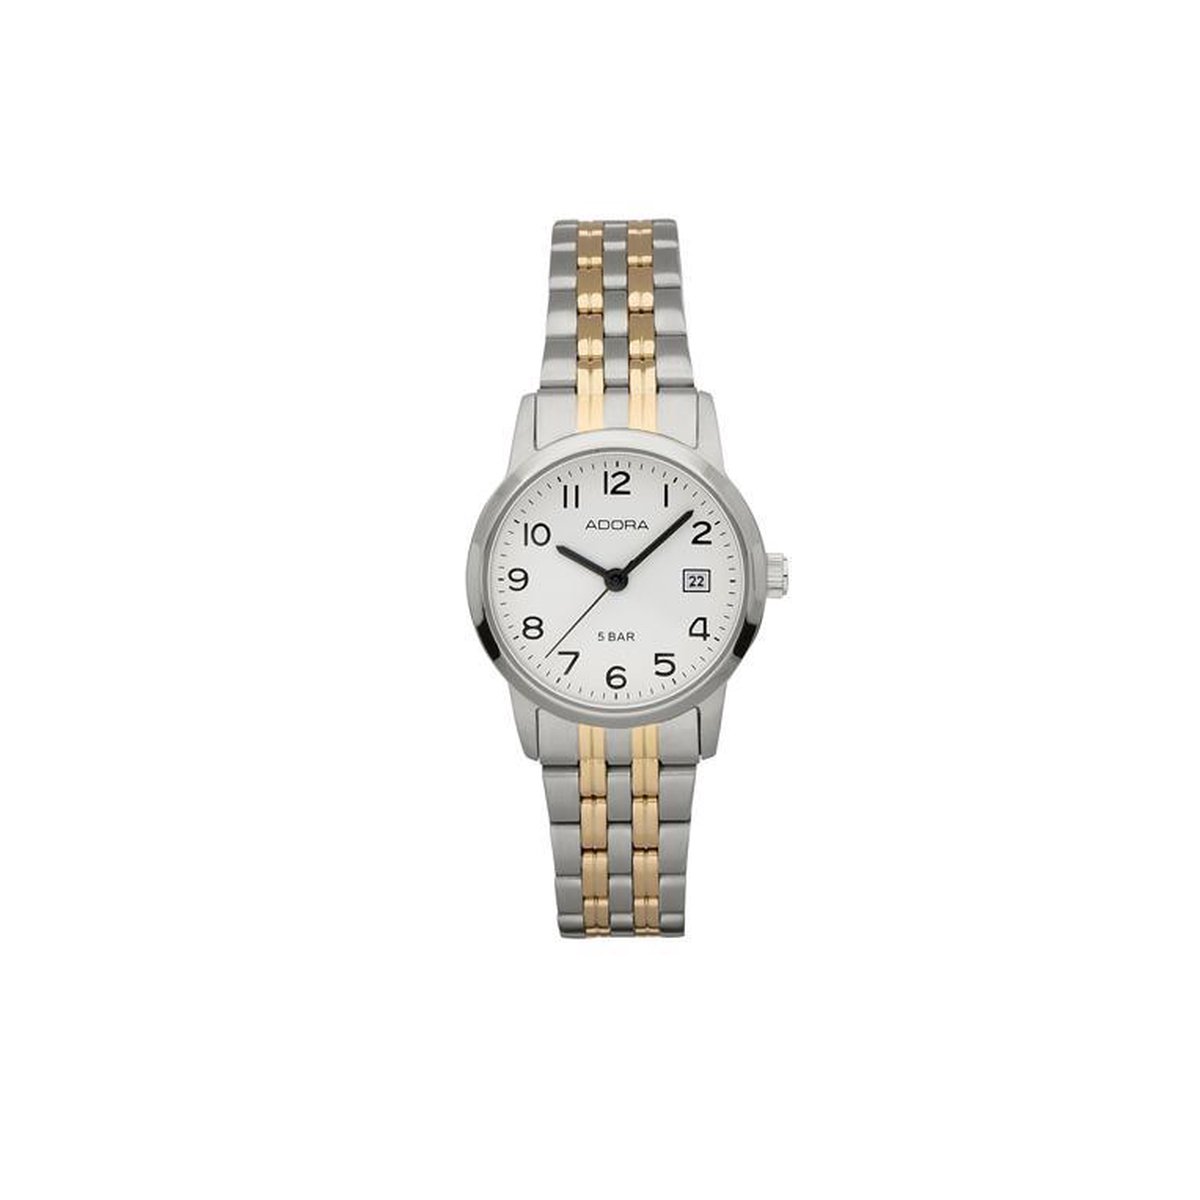 Mooi dames horloge met datumaanduiding-zilverkleurig-goudkleurig-AB6264